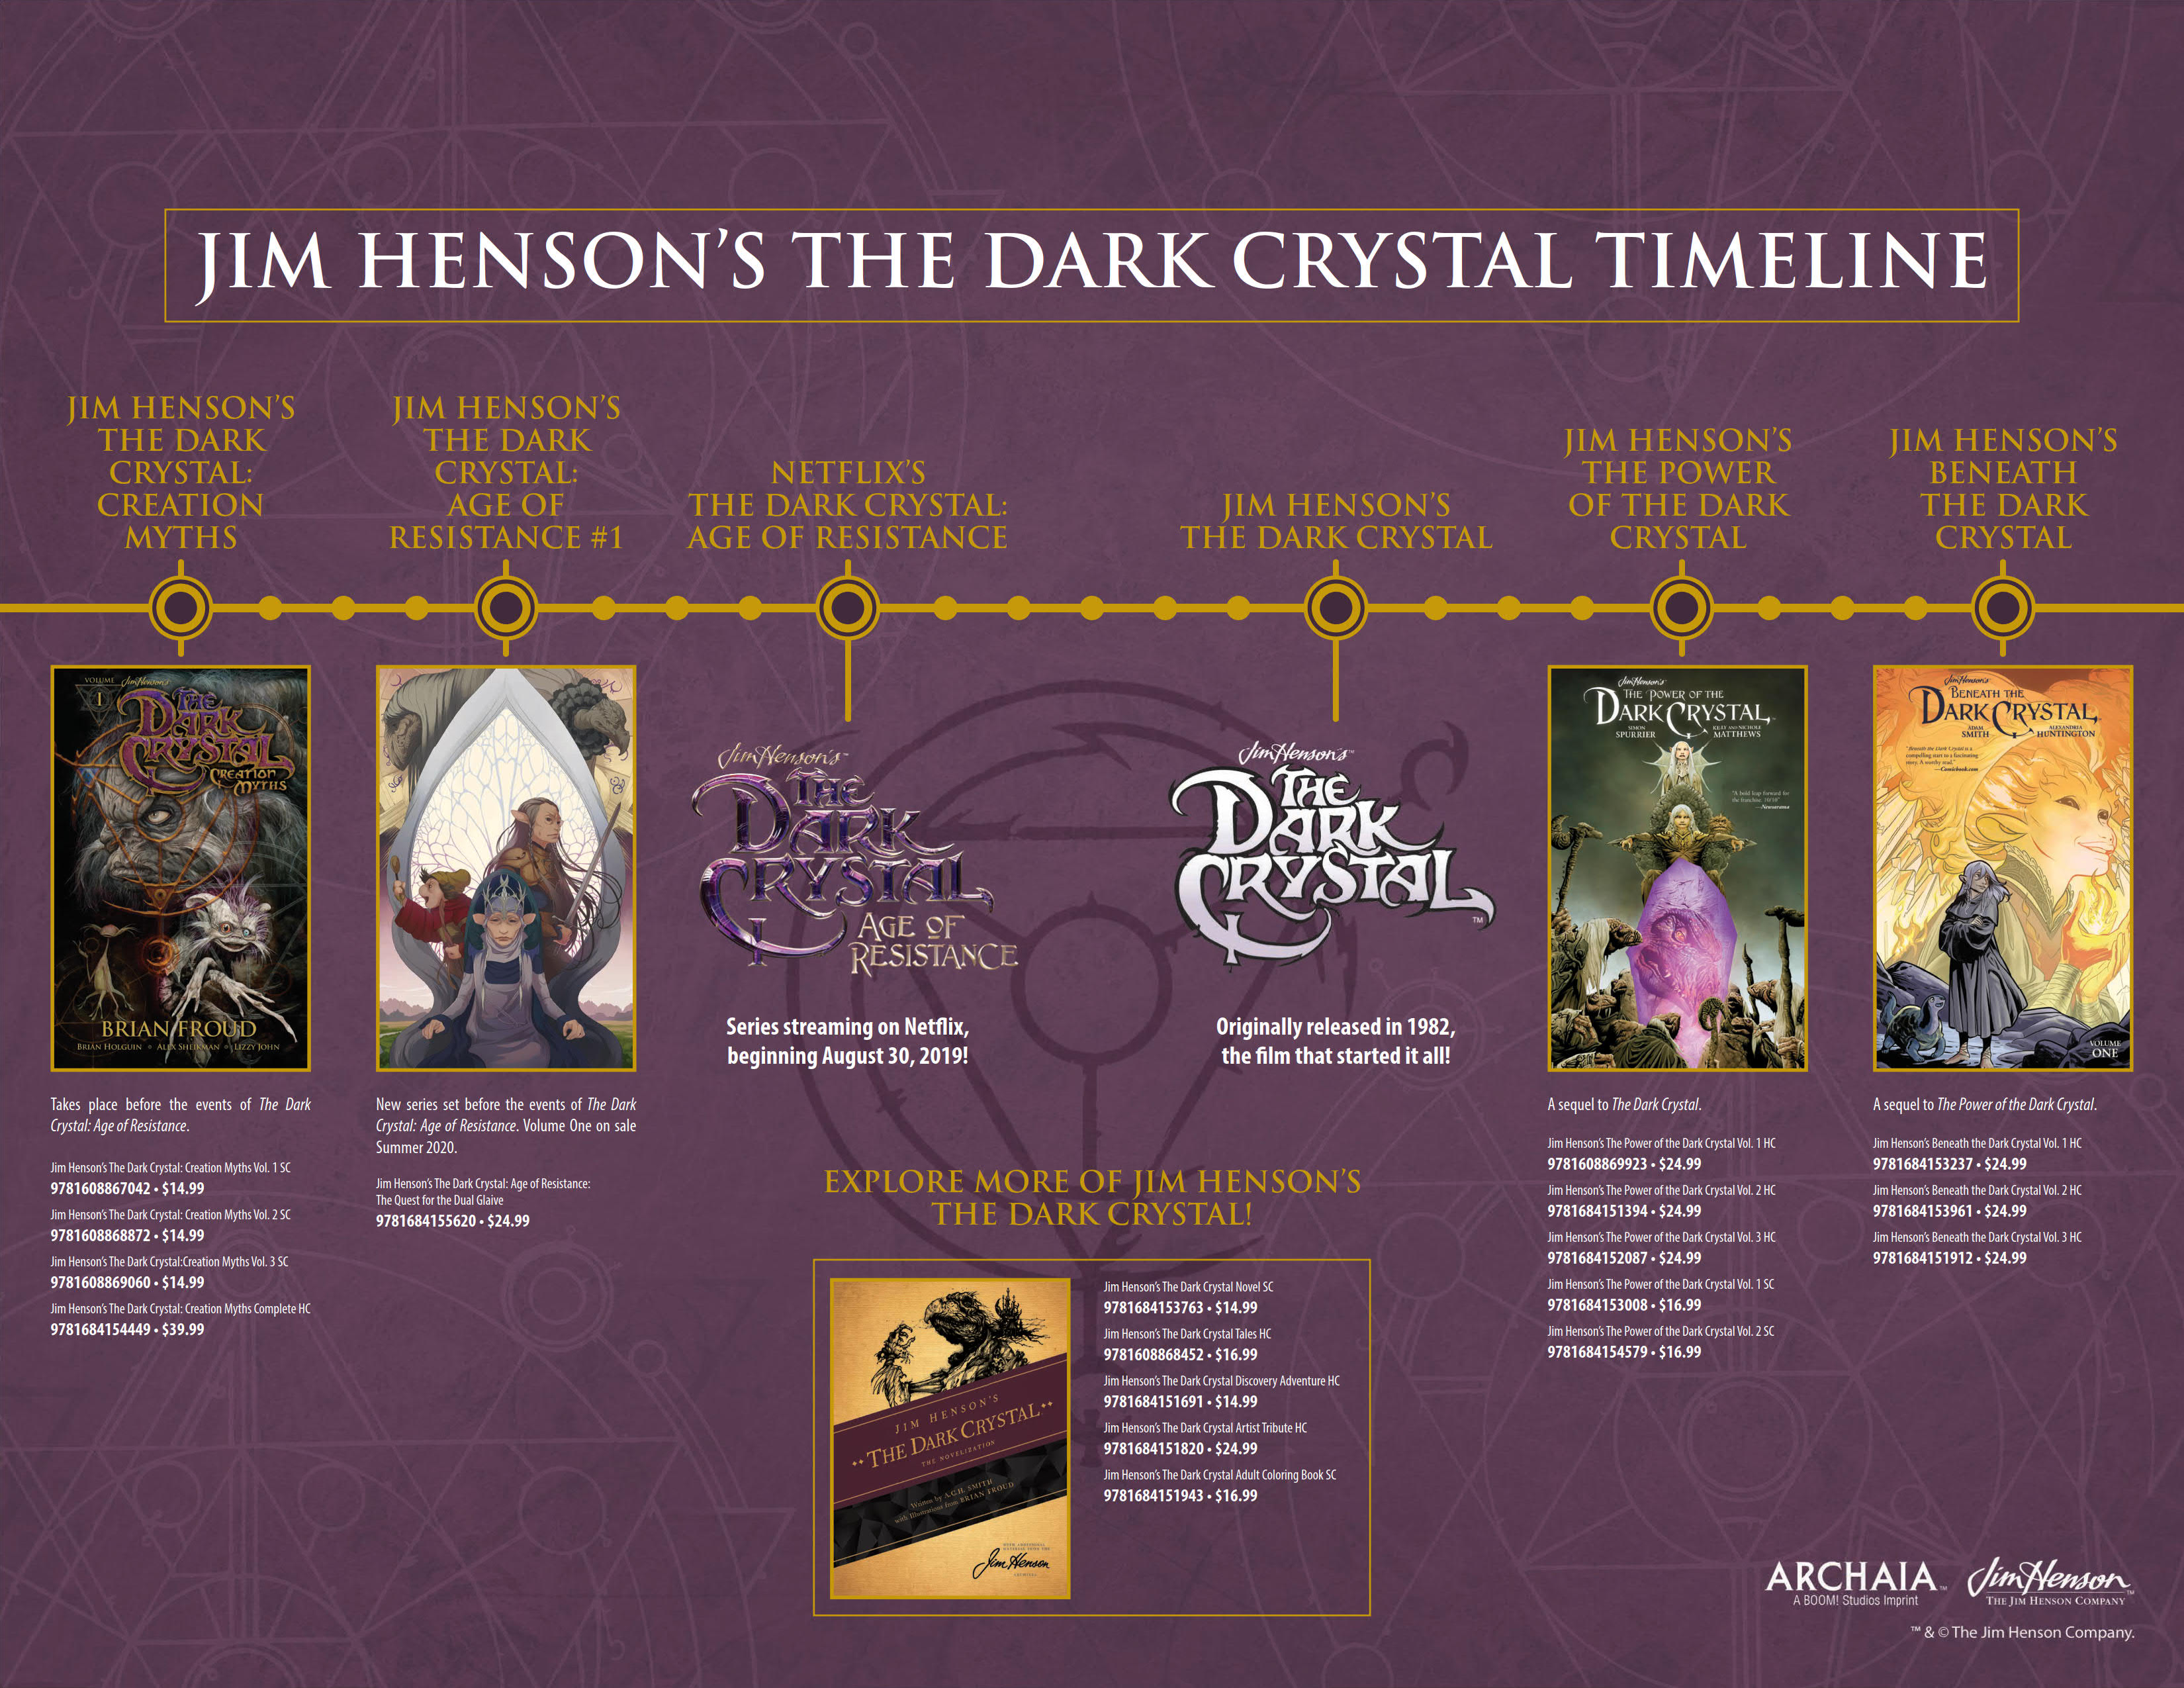 The Dark Crystal timeline